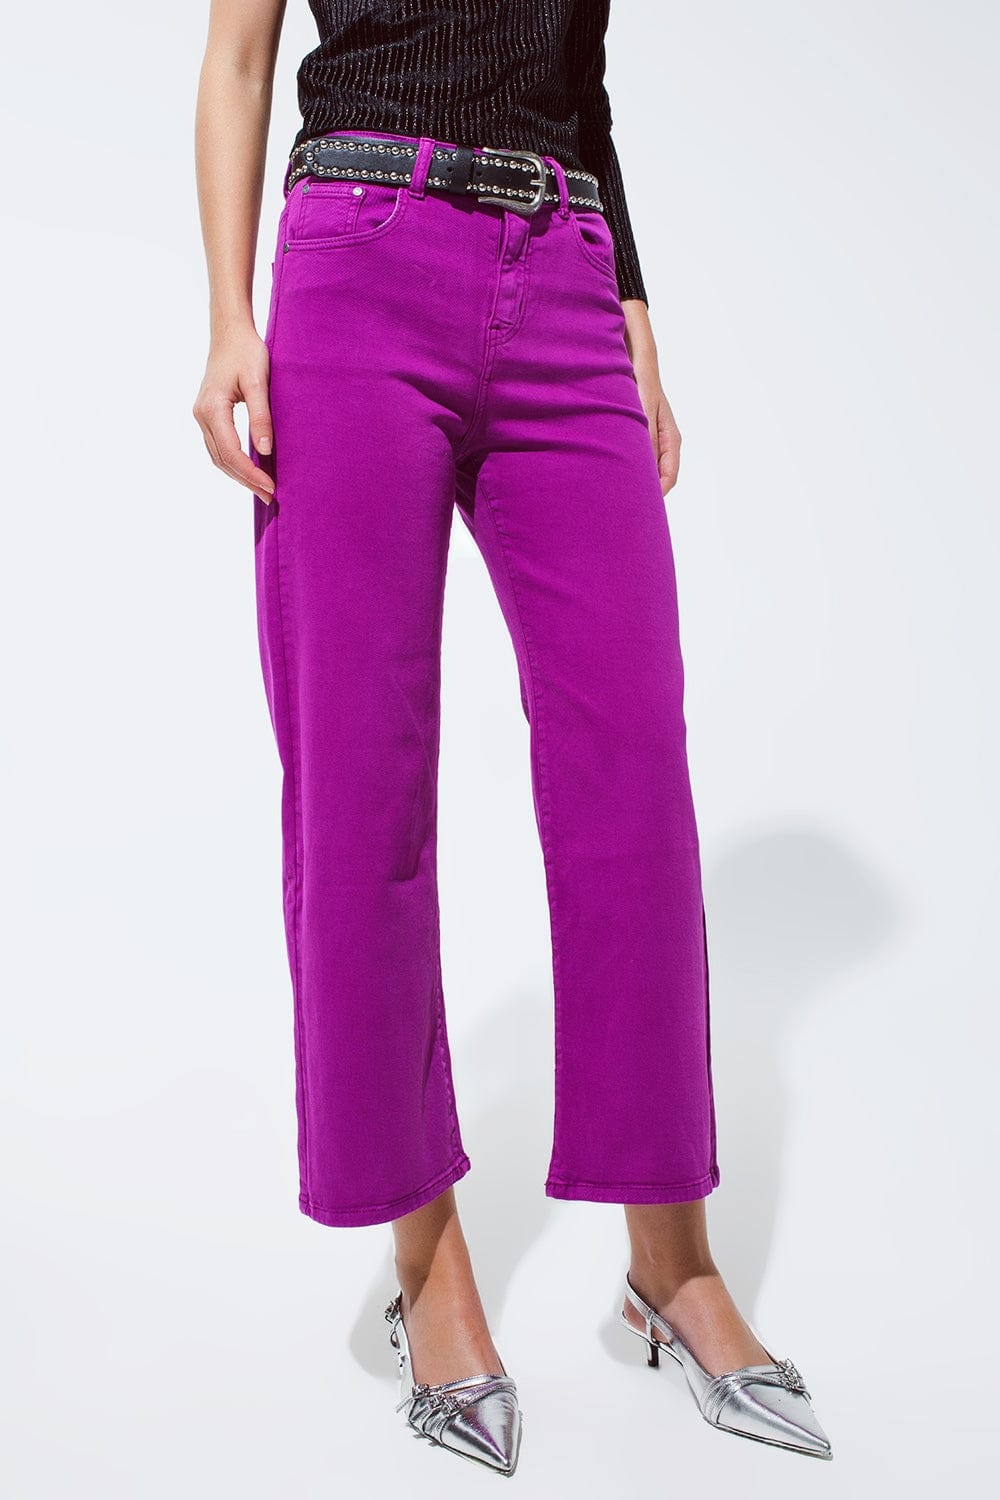 Q2 Women's Jean Cropped Wide Leg Jeans In Violet 3/4 Length